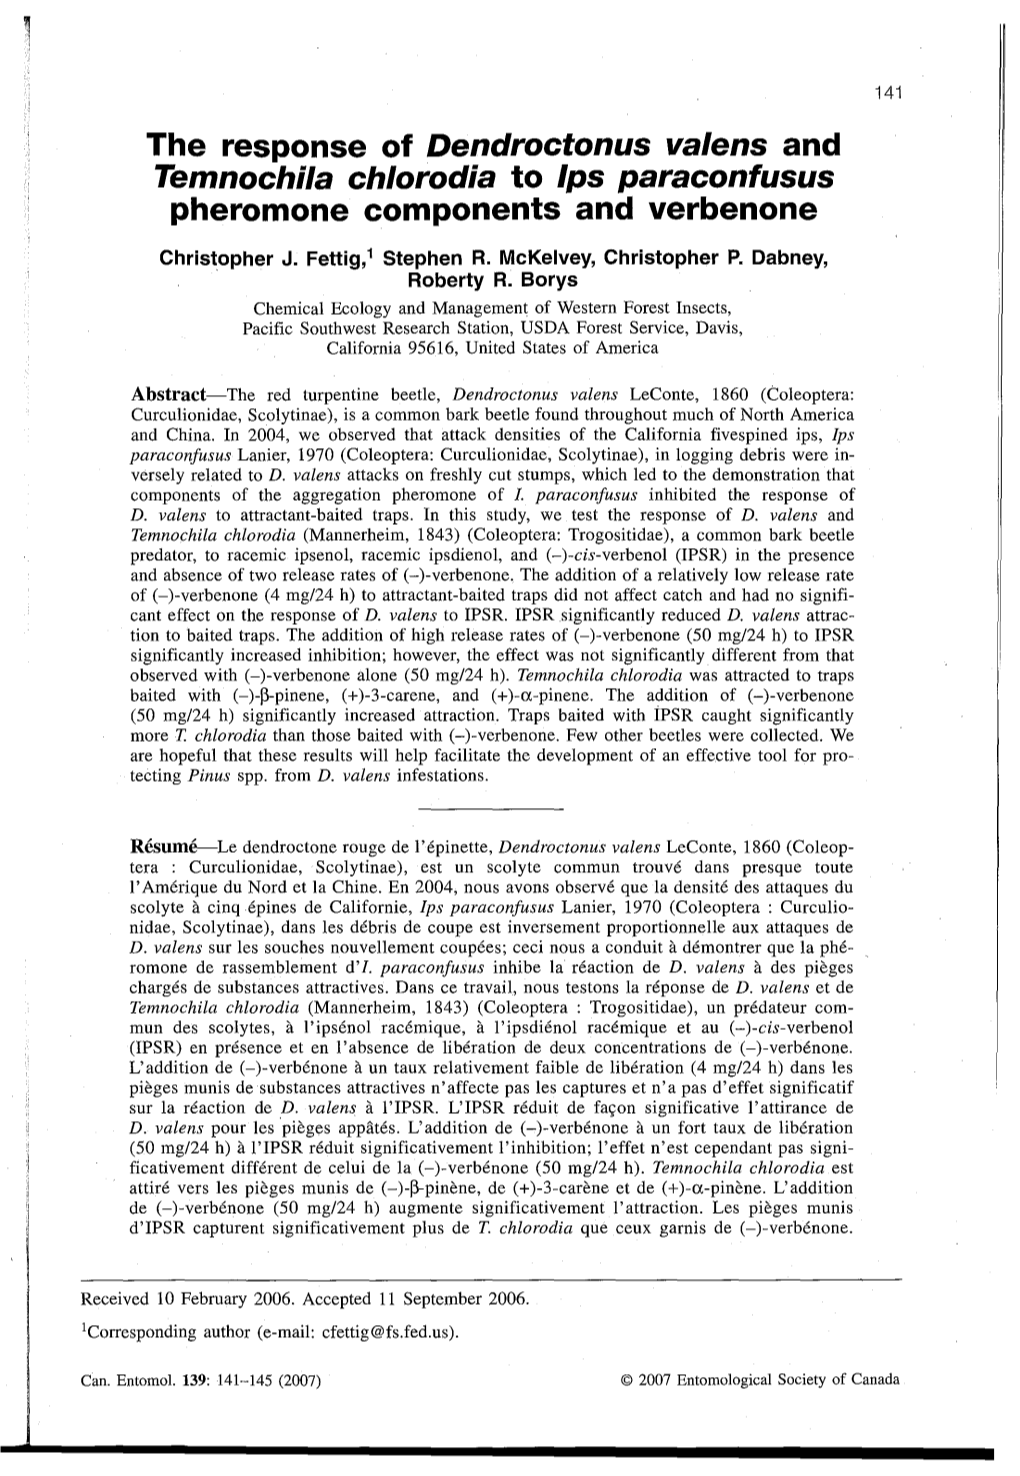 The Response of Dendroctonus Va/Ens and Temnochila Chlorodia to Ips Paraconfusus Pheromone Components and Verbenone